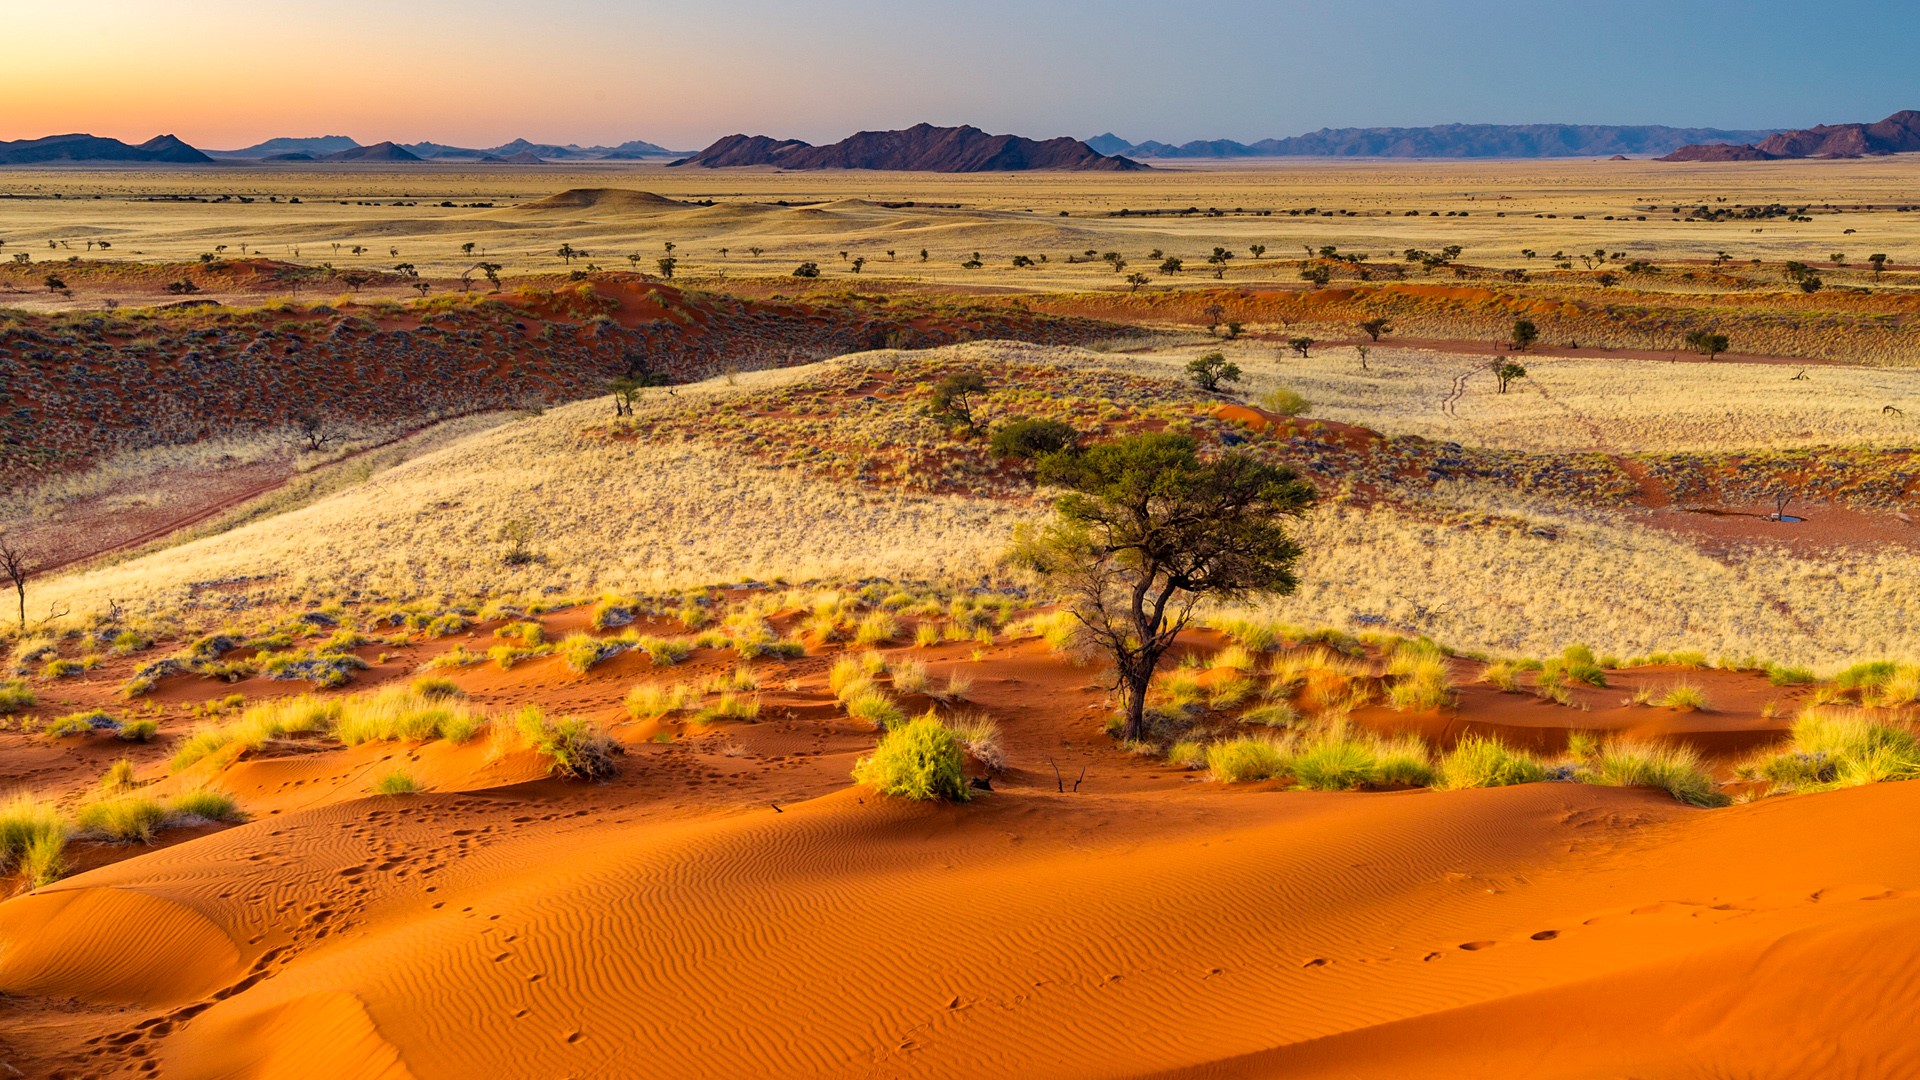 General 1920x1080 nature landscape mountains plants trees sand desert dunes sunset Namibia savannah